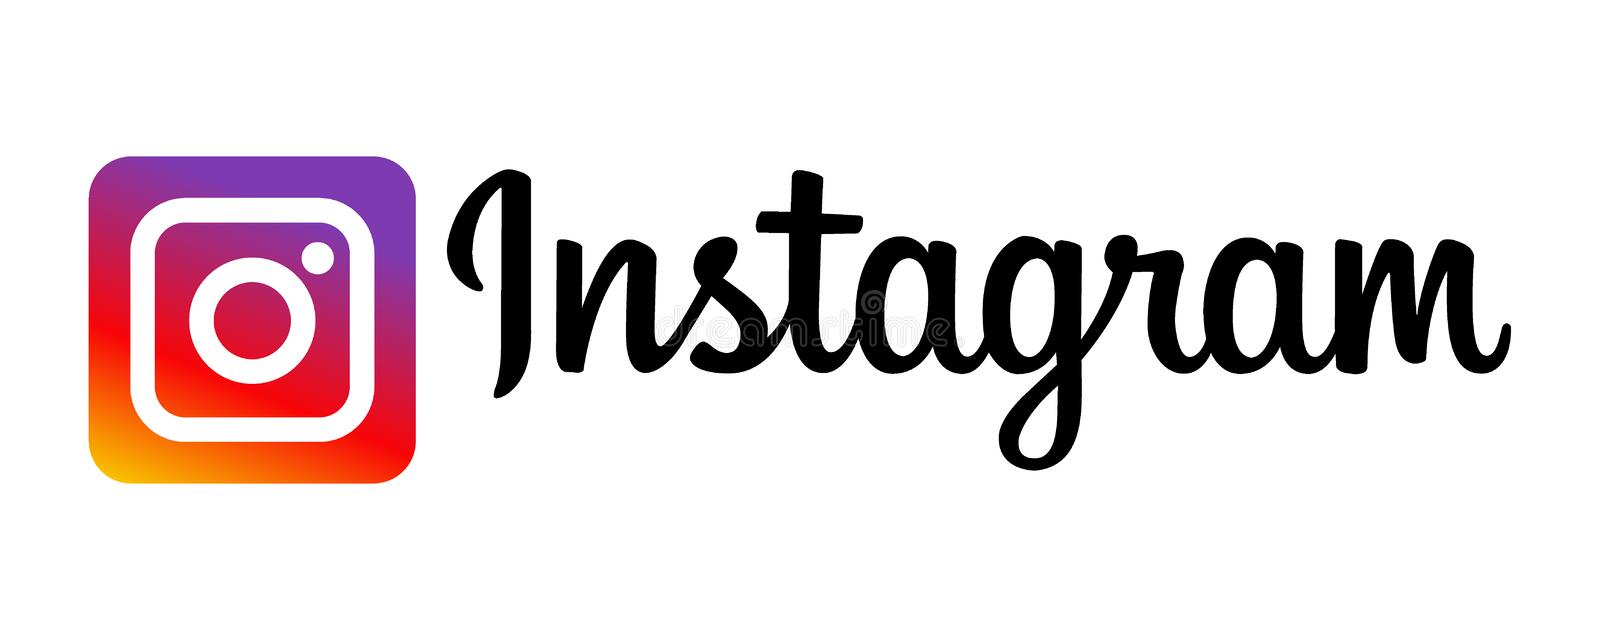 [ 3 Post ] 500 Instagram Likes